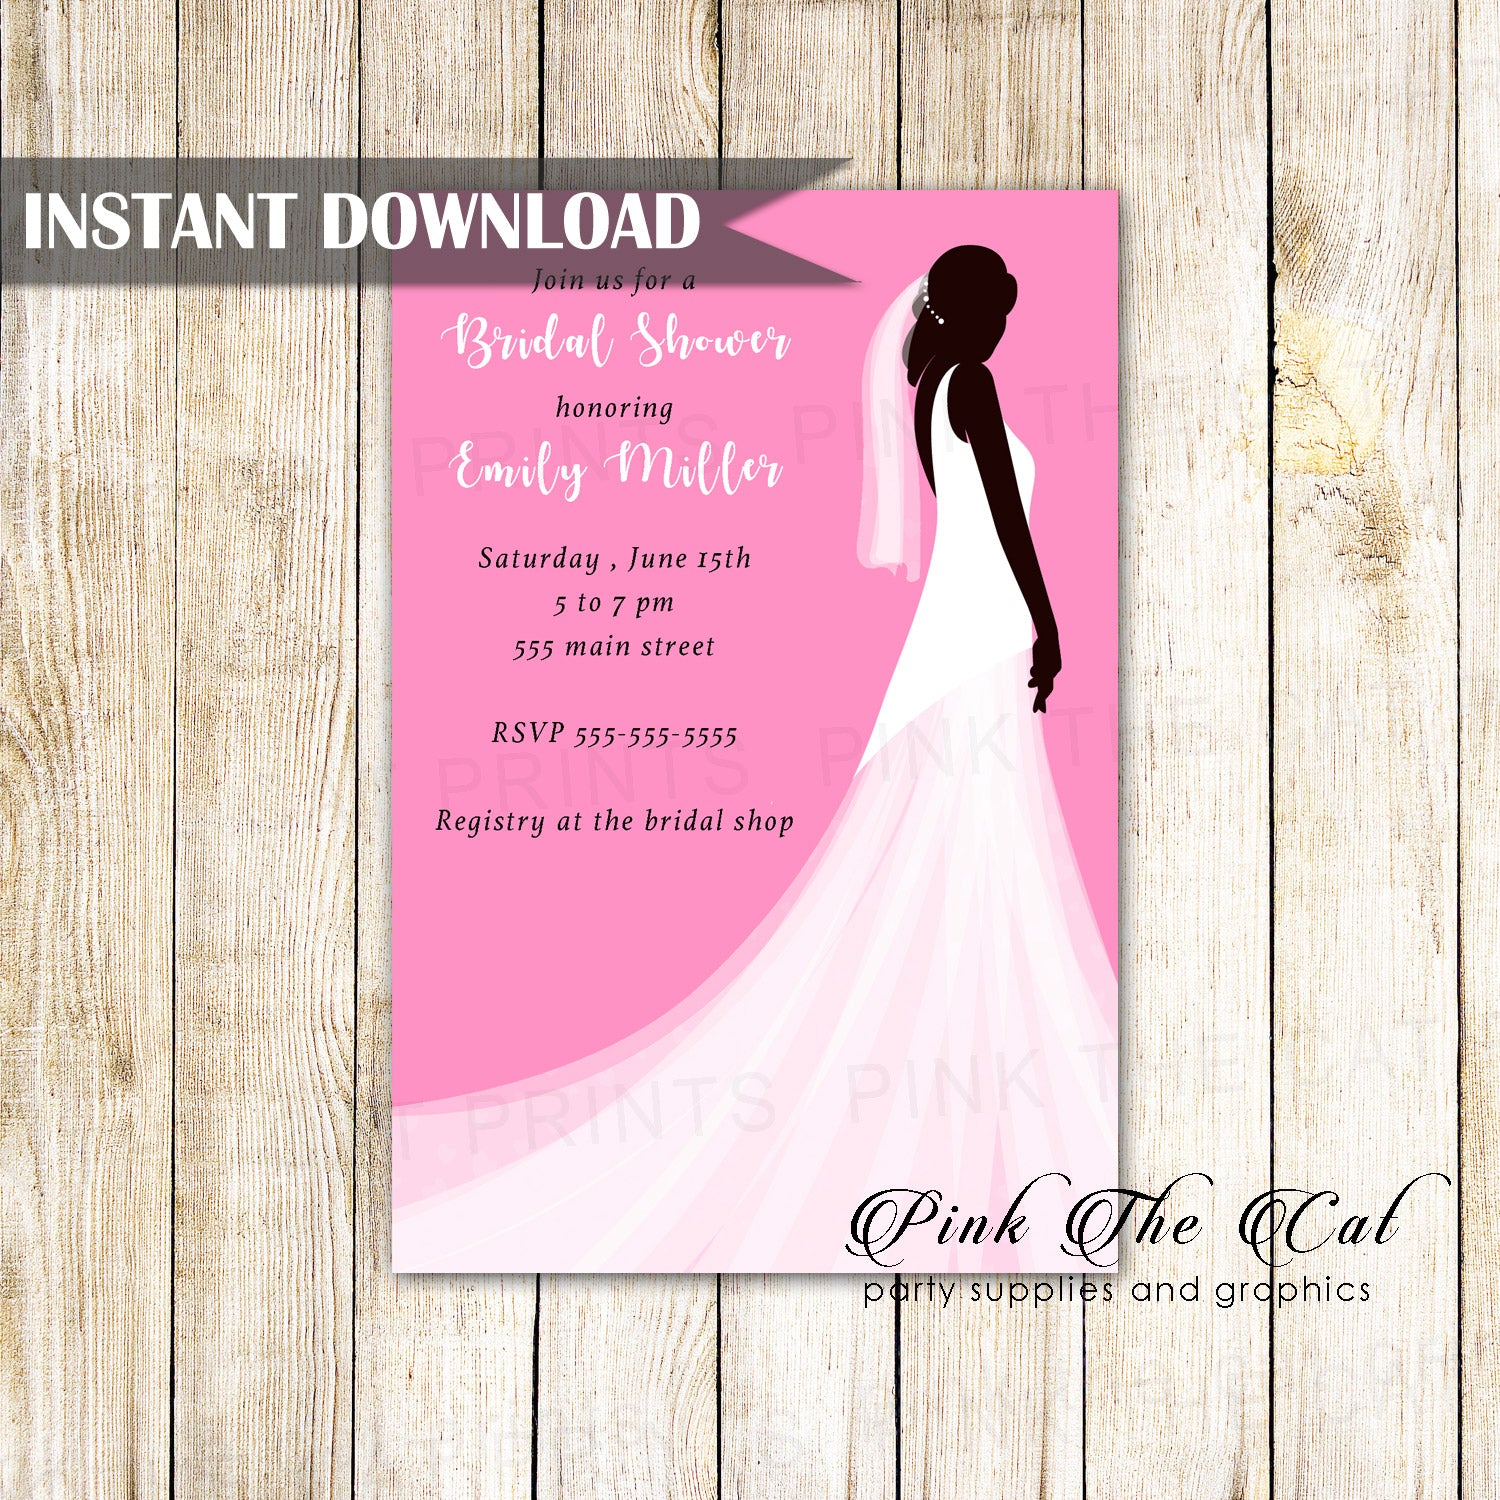 Dress invitation pink white wedding bridal shower instant download